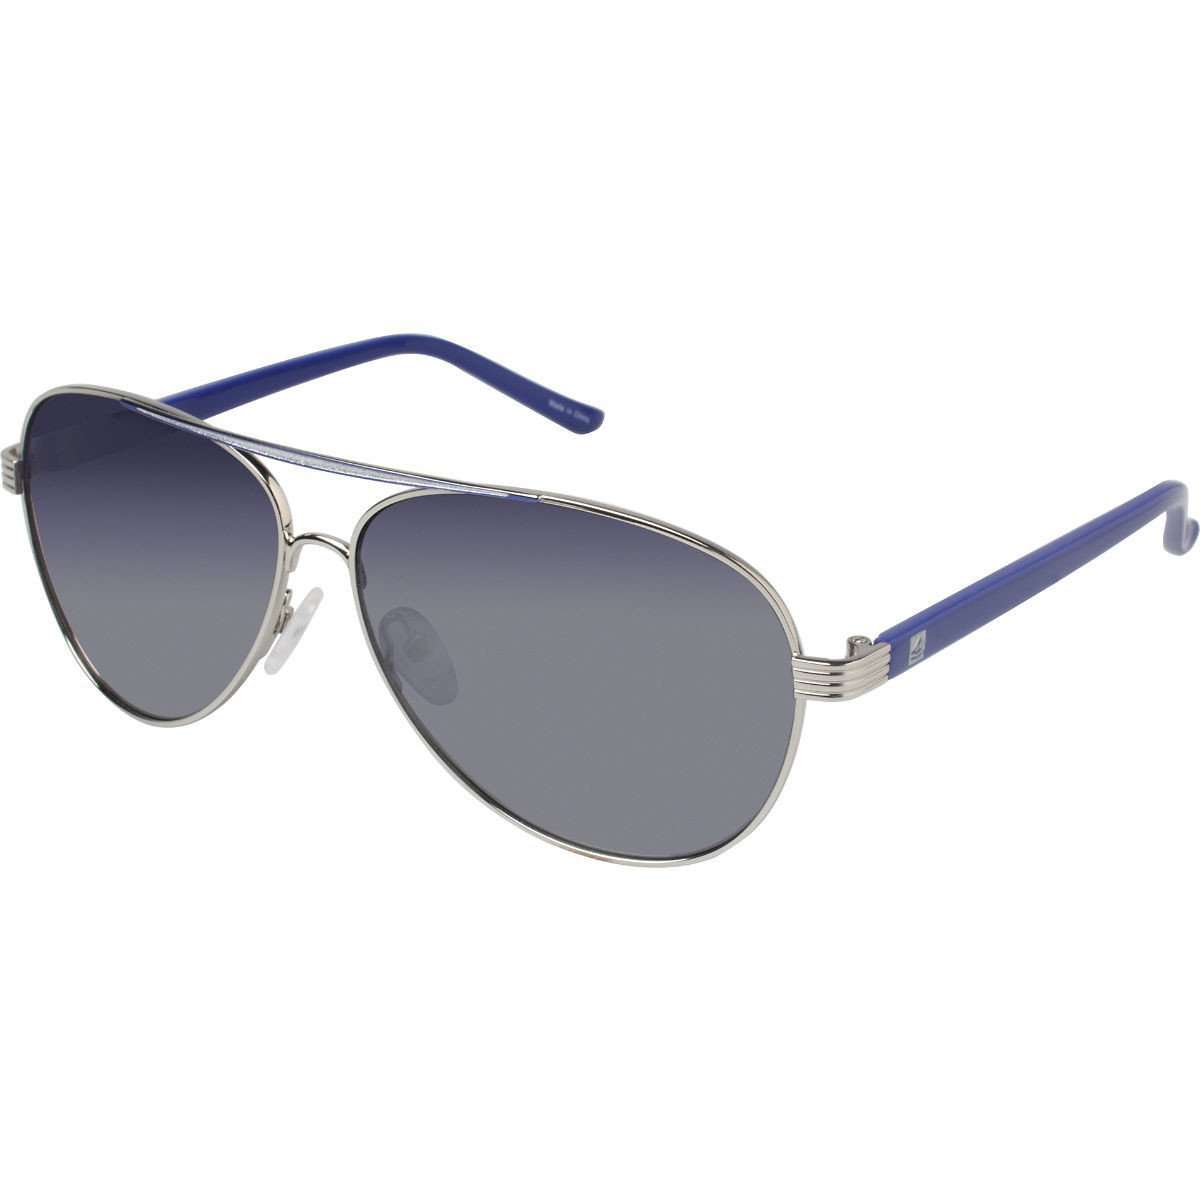 Seabrook Polarized Sunglasses by Sperry - Country Club Prep